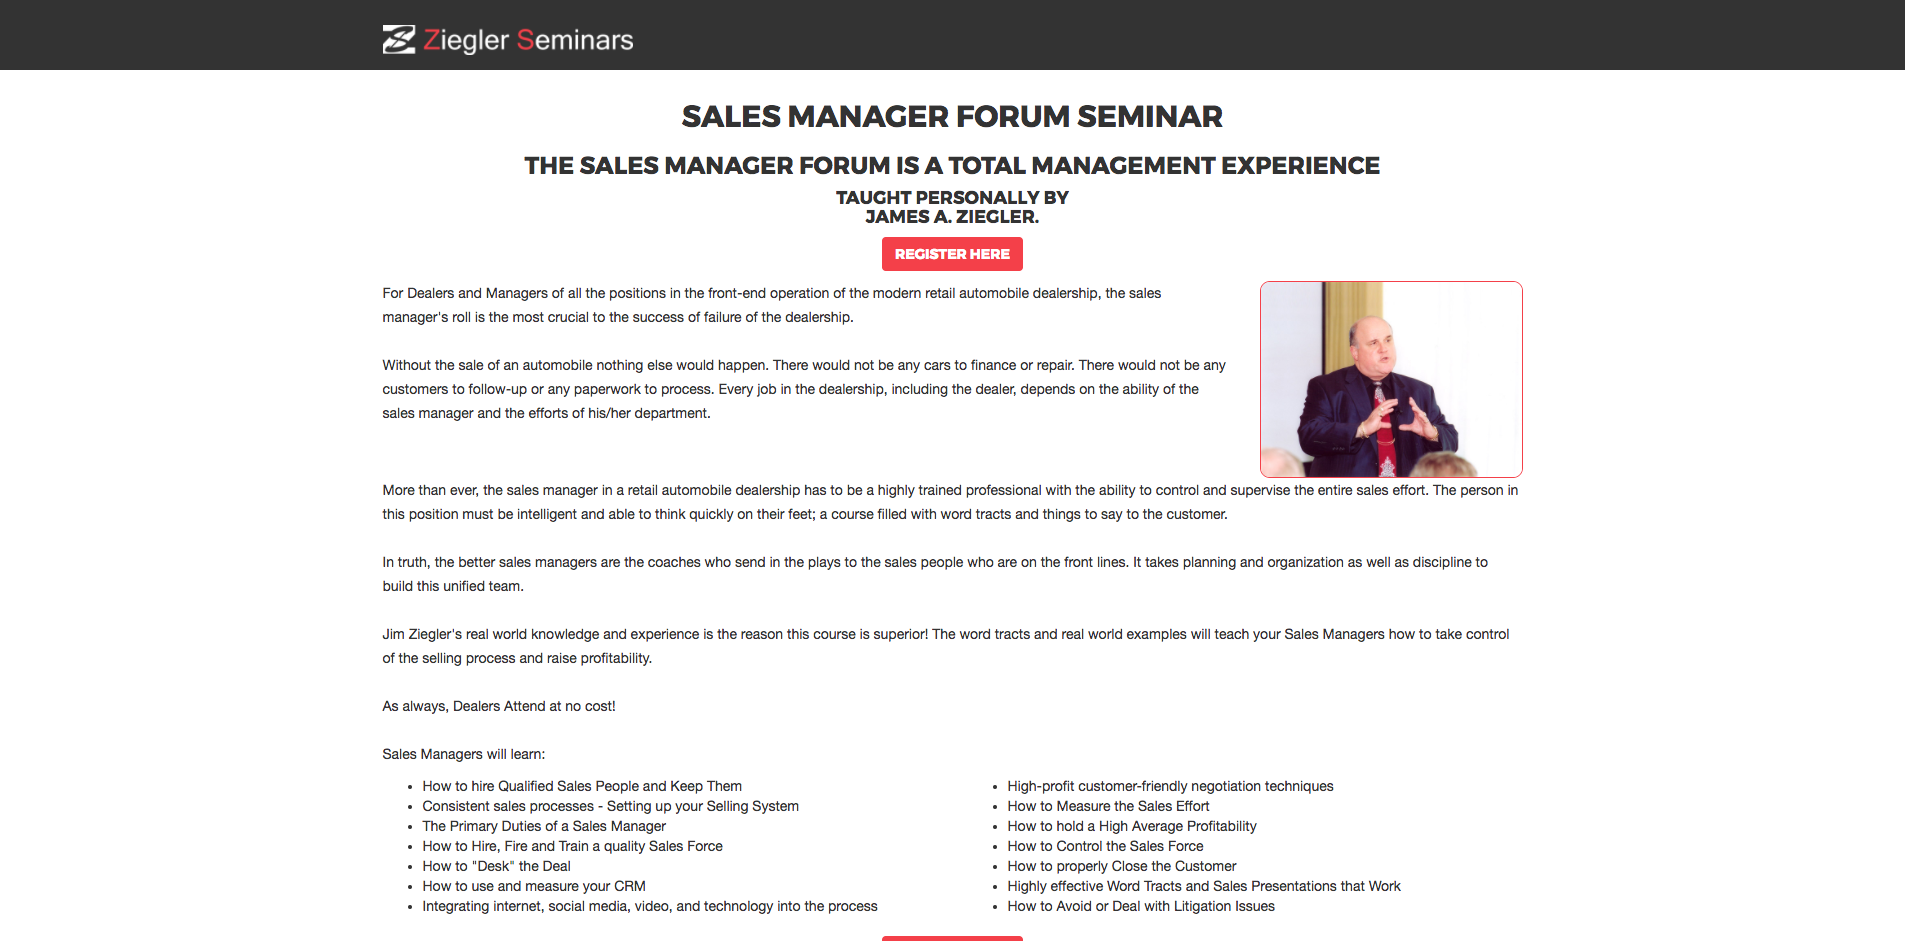 Jim Ziegler Sales Manager Seminar